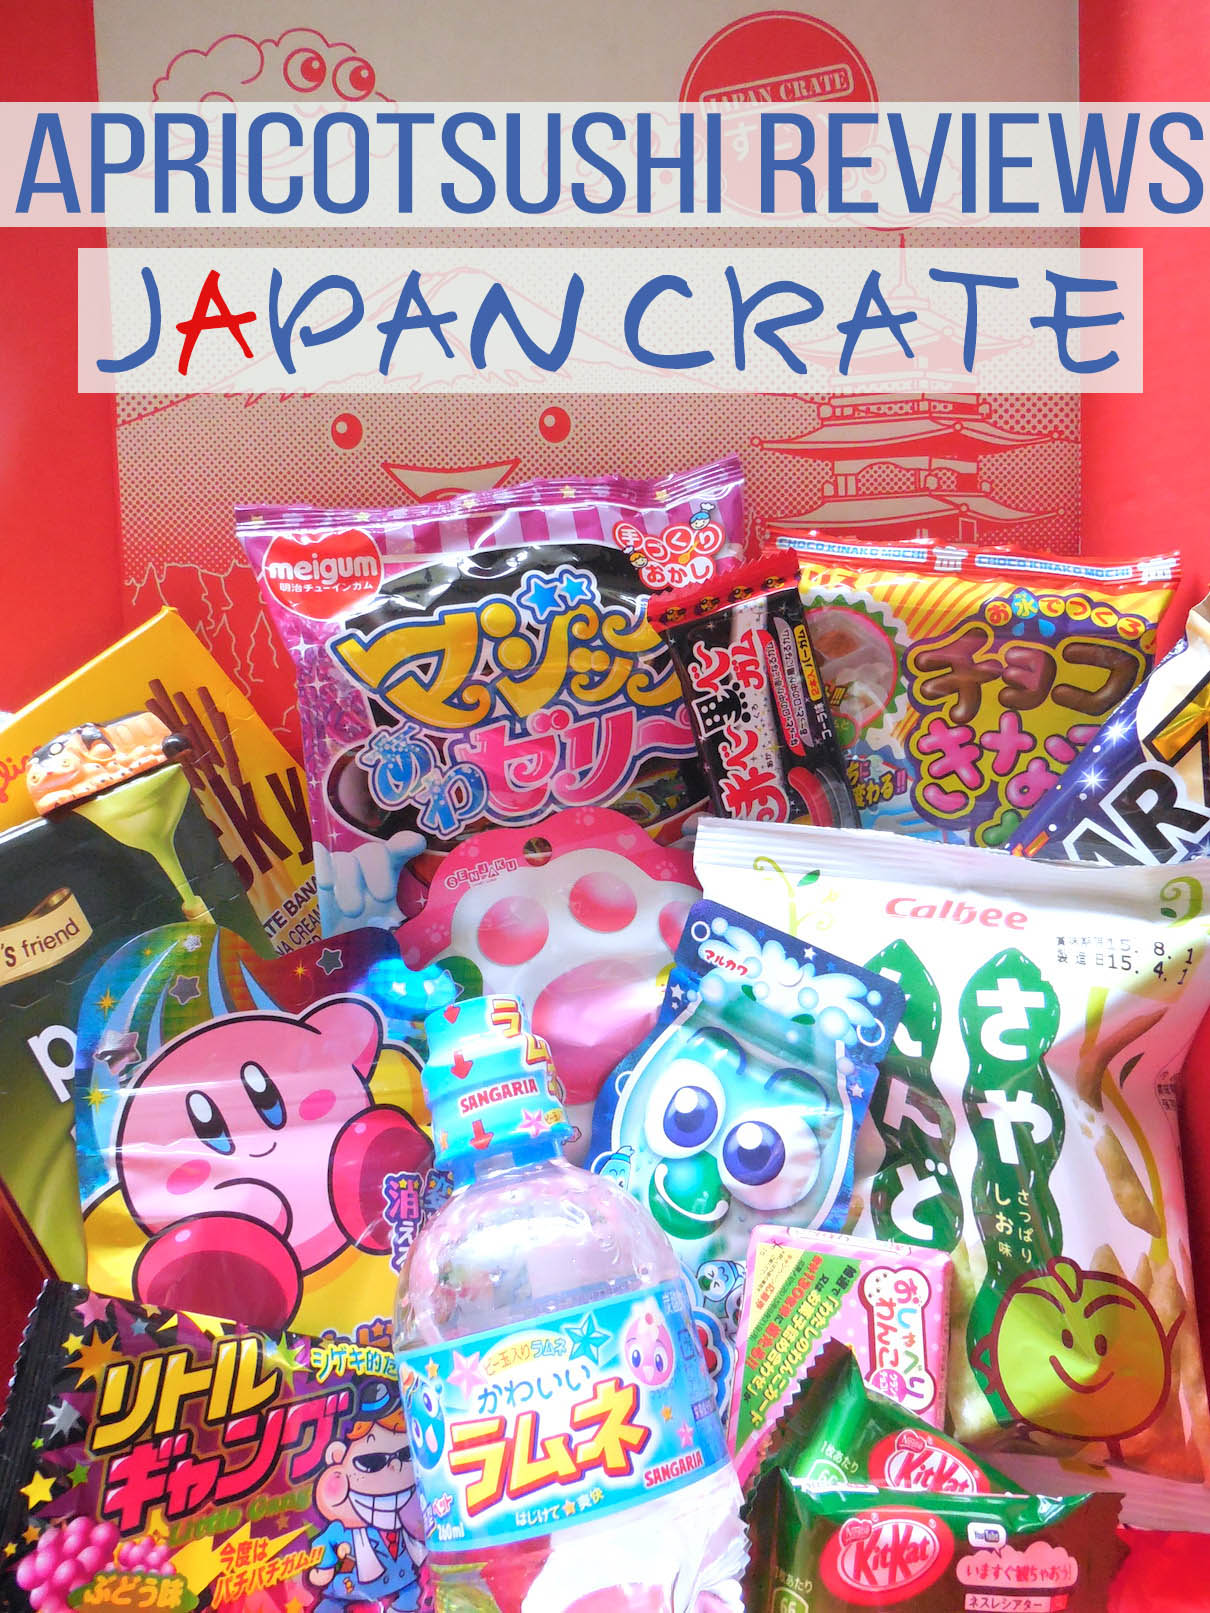 Apricotsushi Reviews: Japan Crate